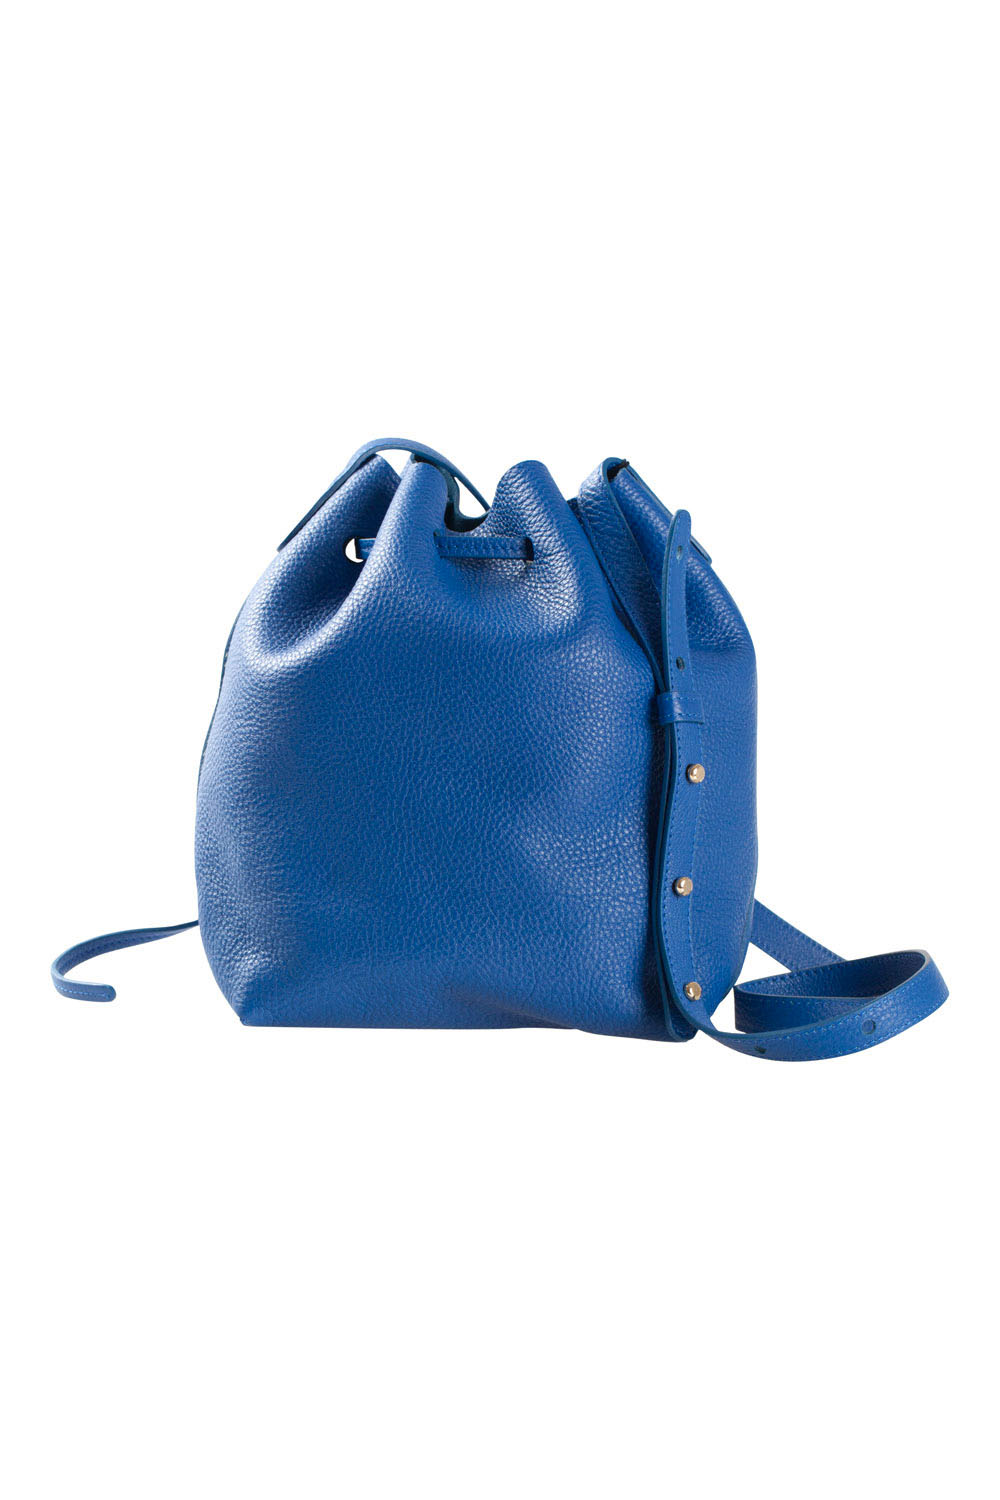 

Mansur Gavriel Royal Blue Soft Leather Mini Bucket Bag